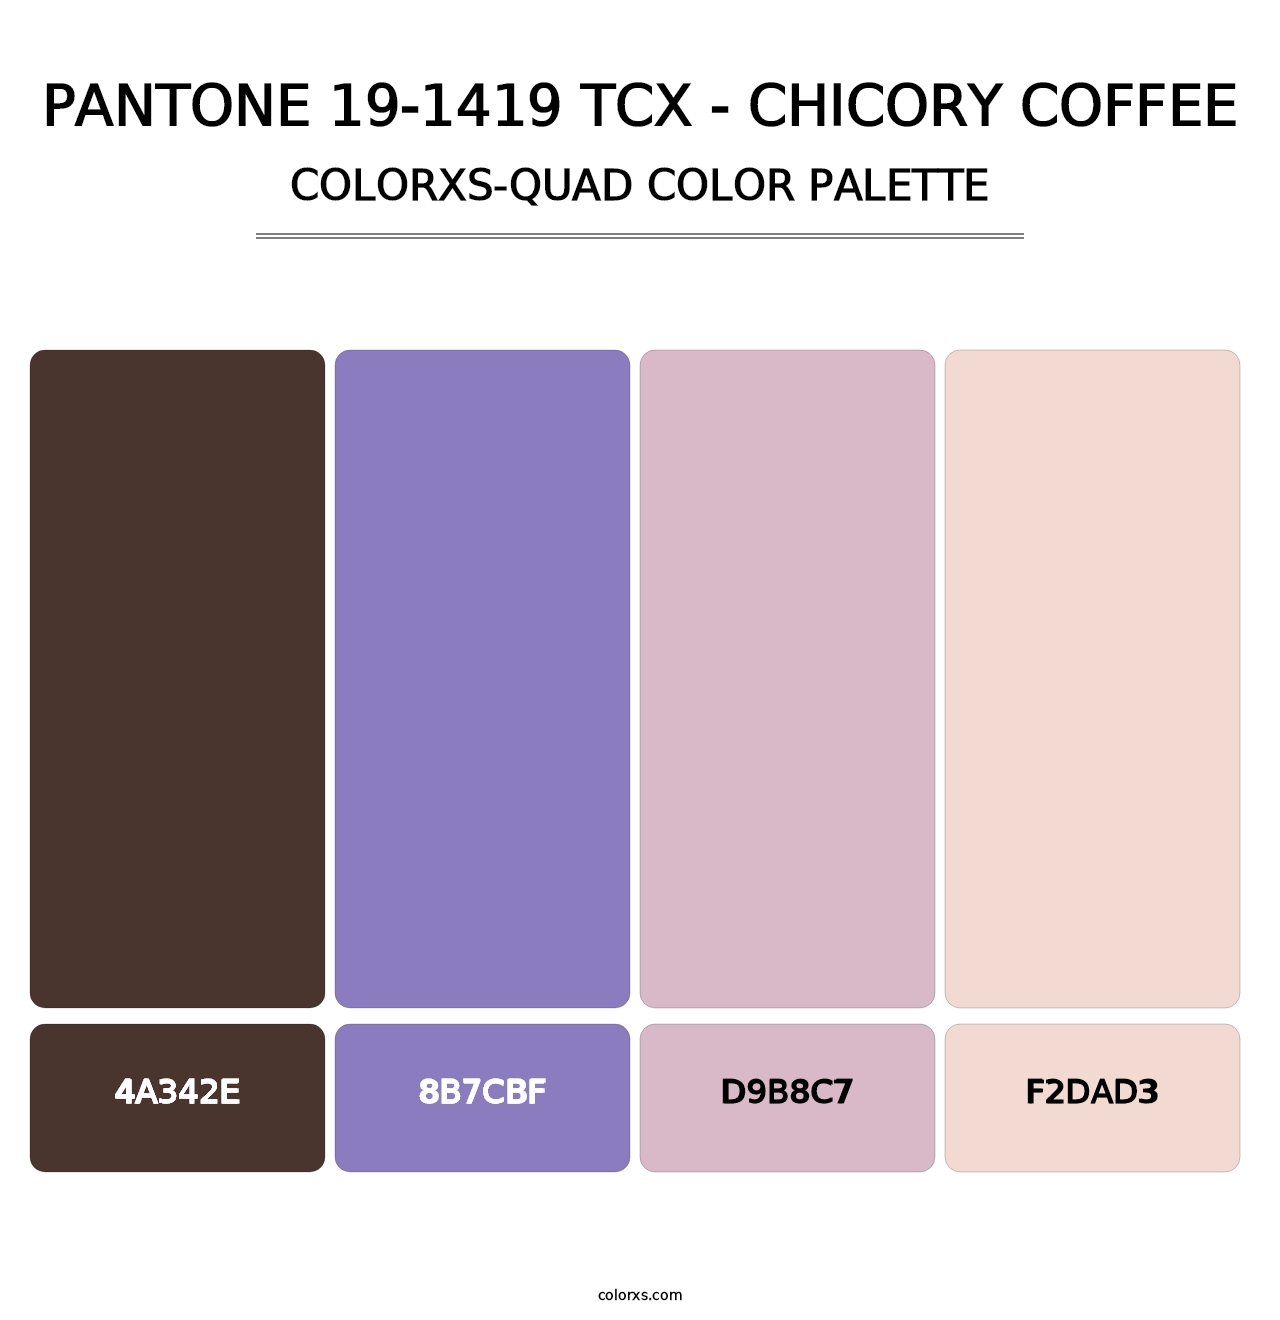 PANTONE 19-1419 TCX - Chicory Coffee - Colorxs Quad Palette